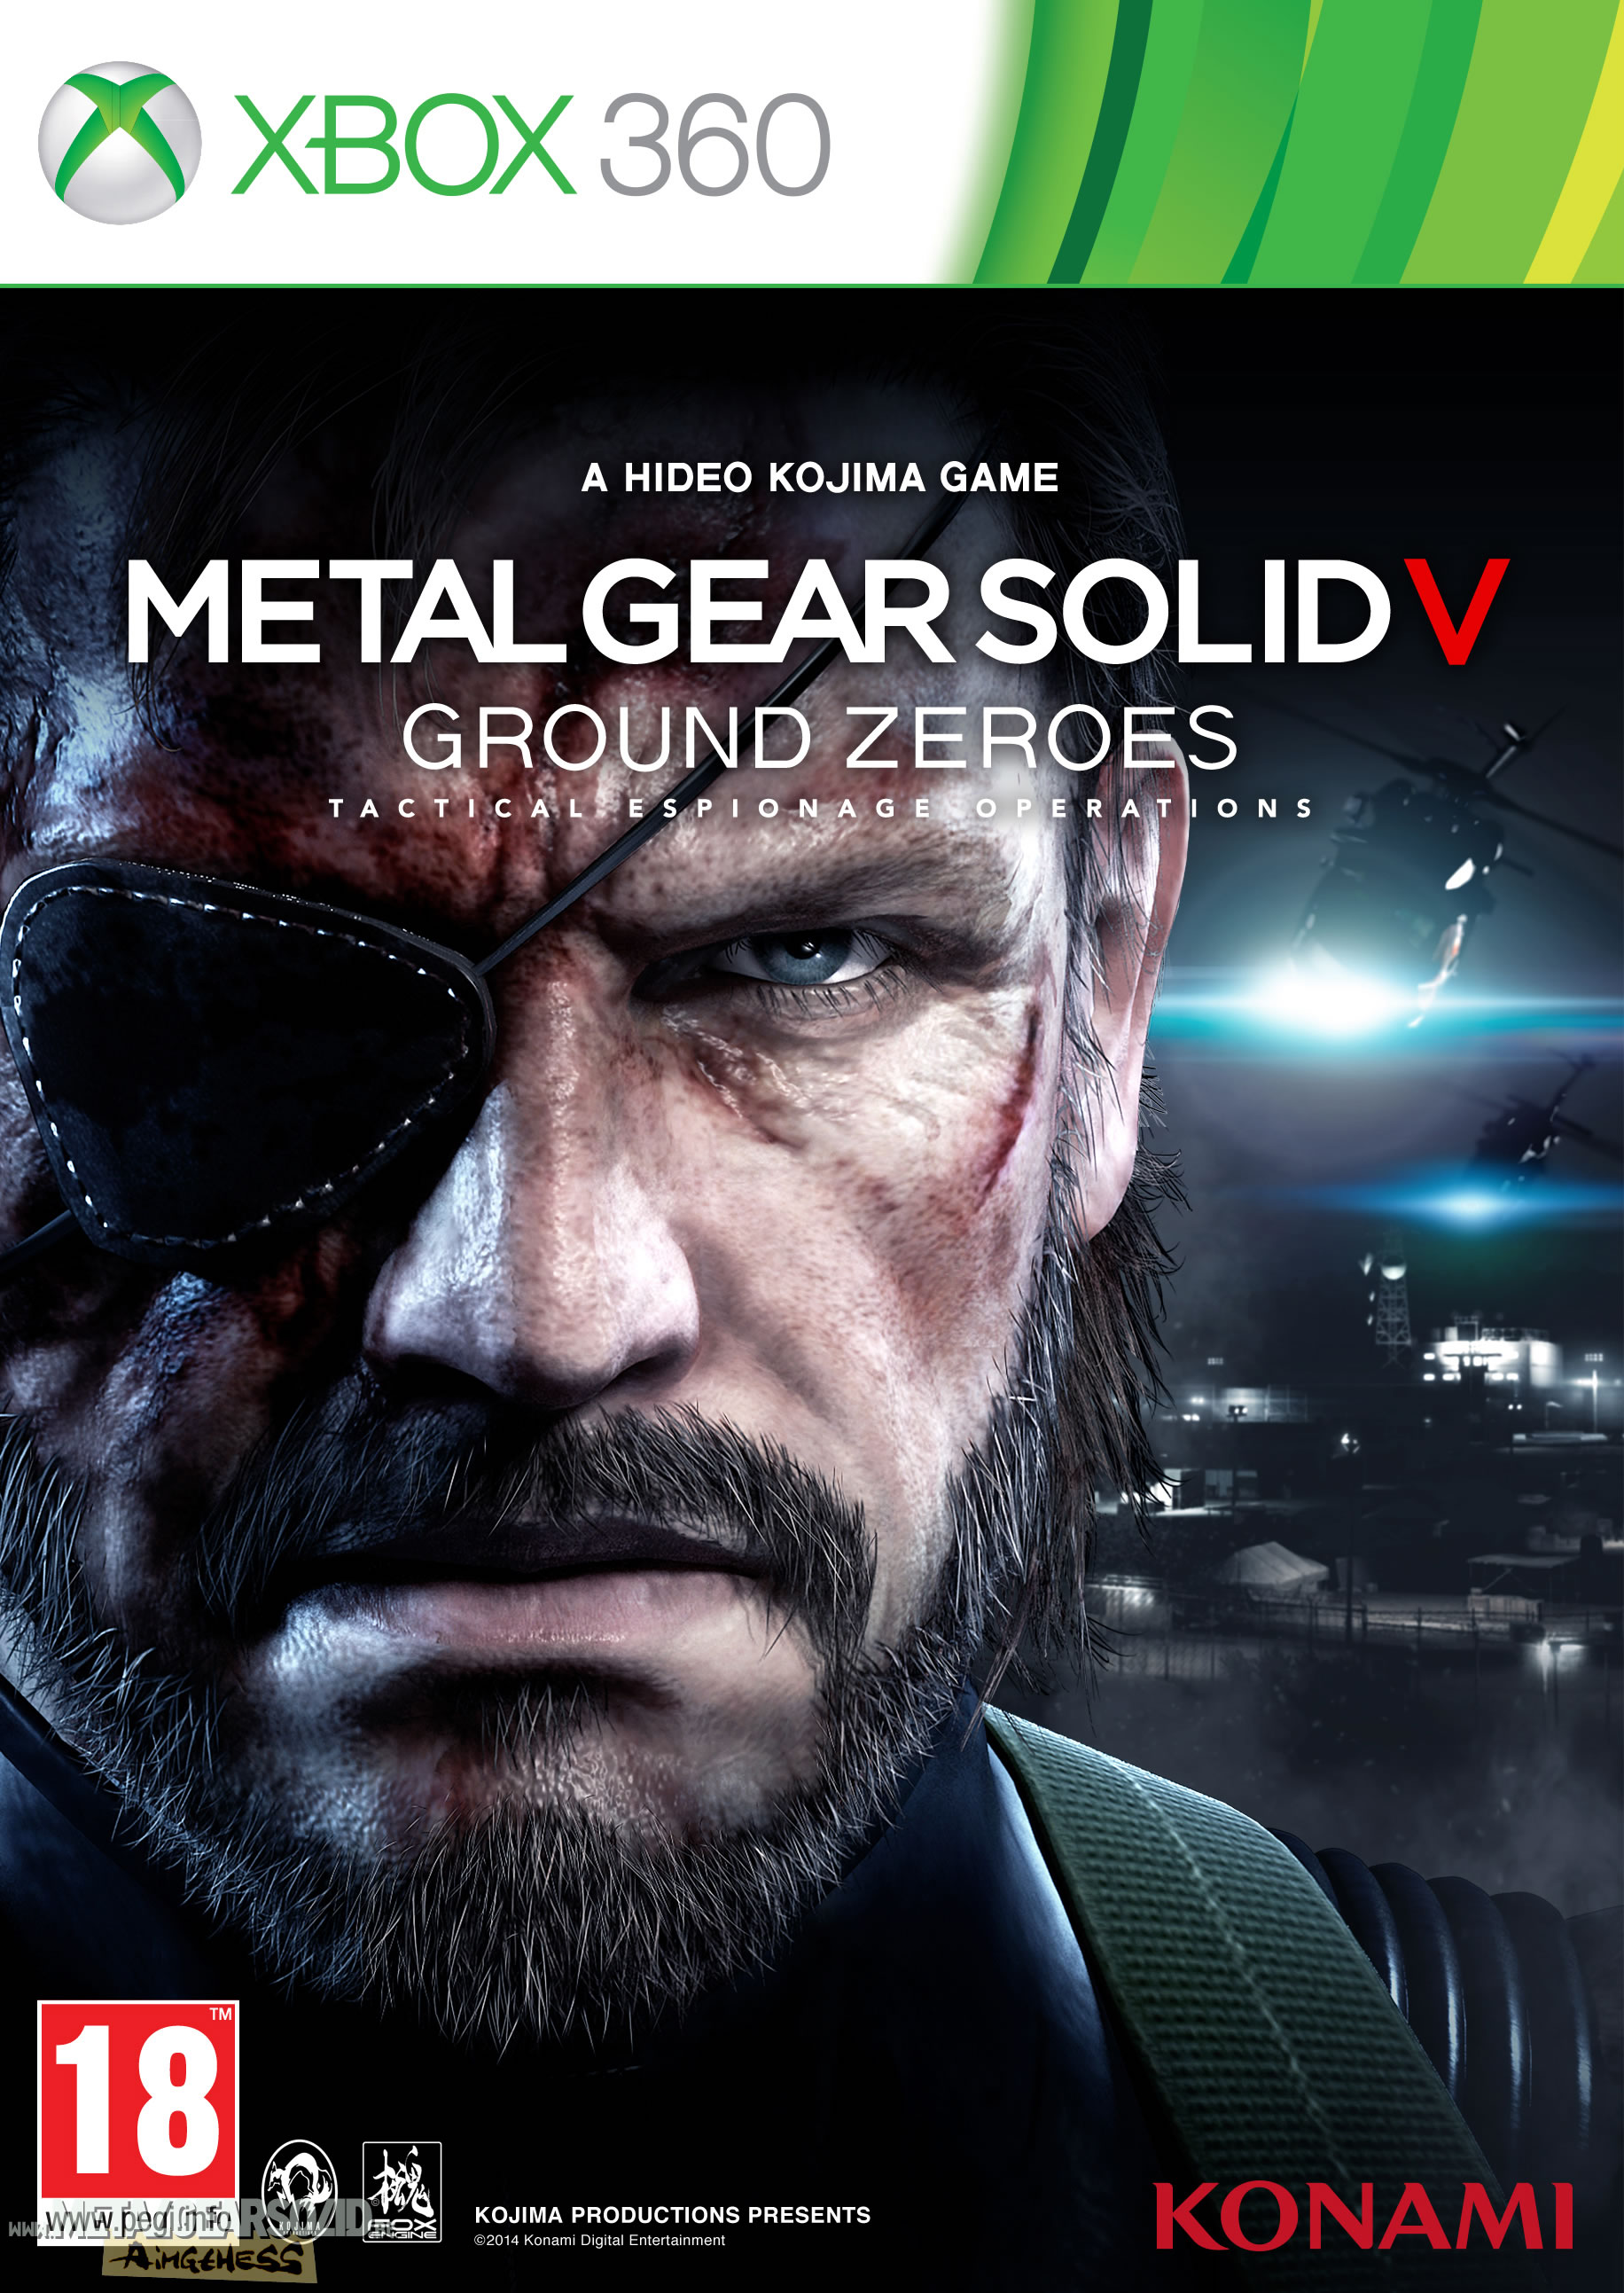 La jaquette Xbox 360 europenne de Metal Gear Solid V : Ground Zeroes